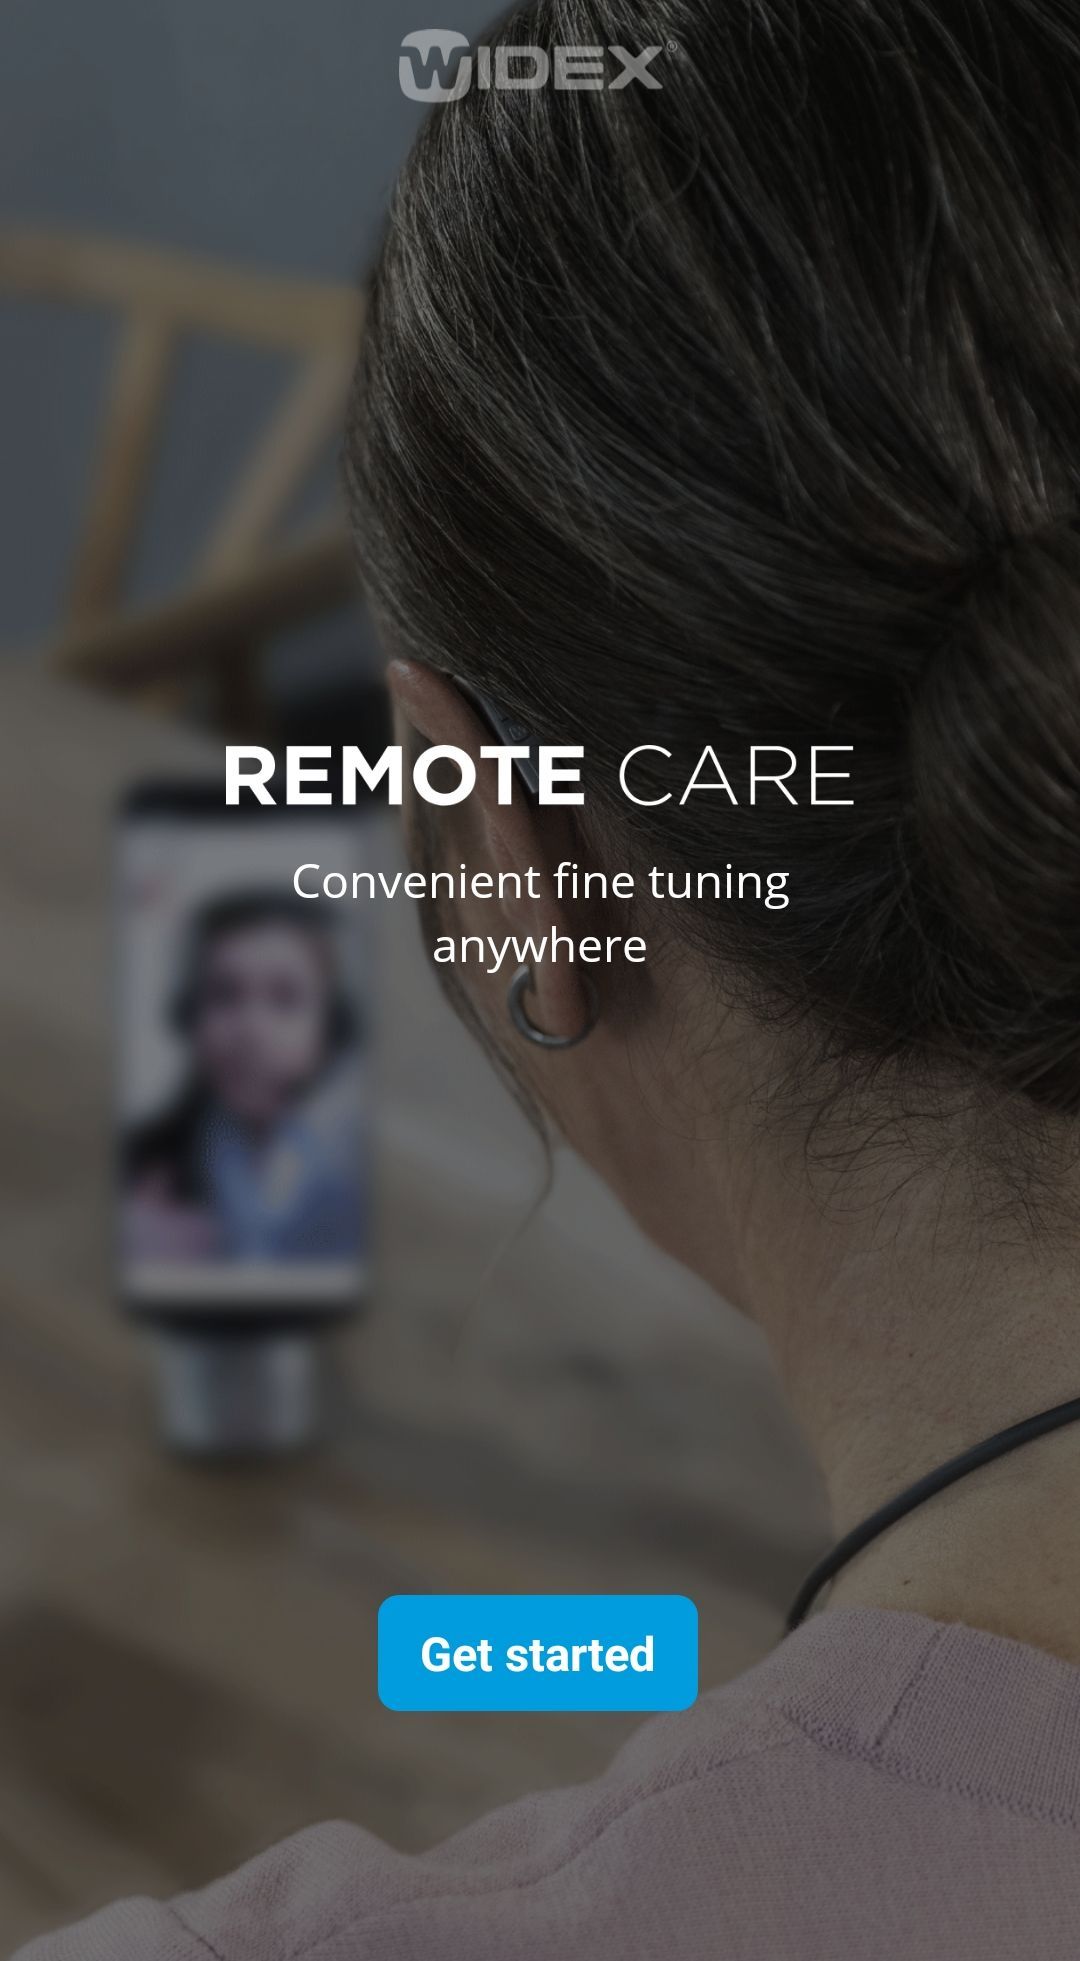 Widex REMOTE CARE app start screen